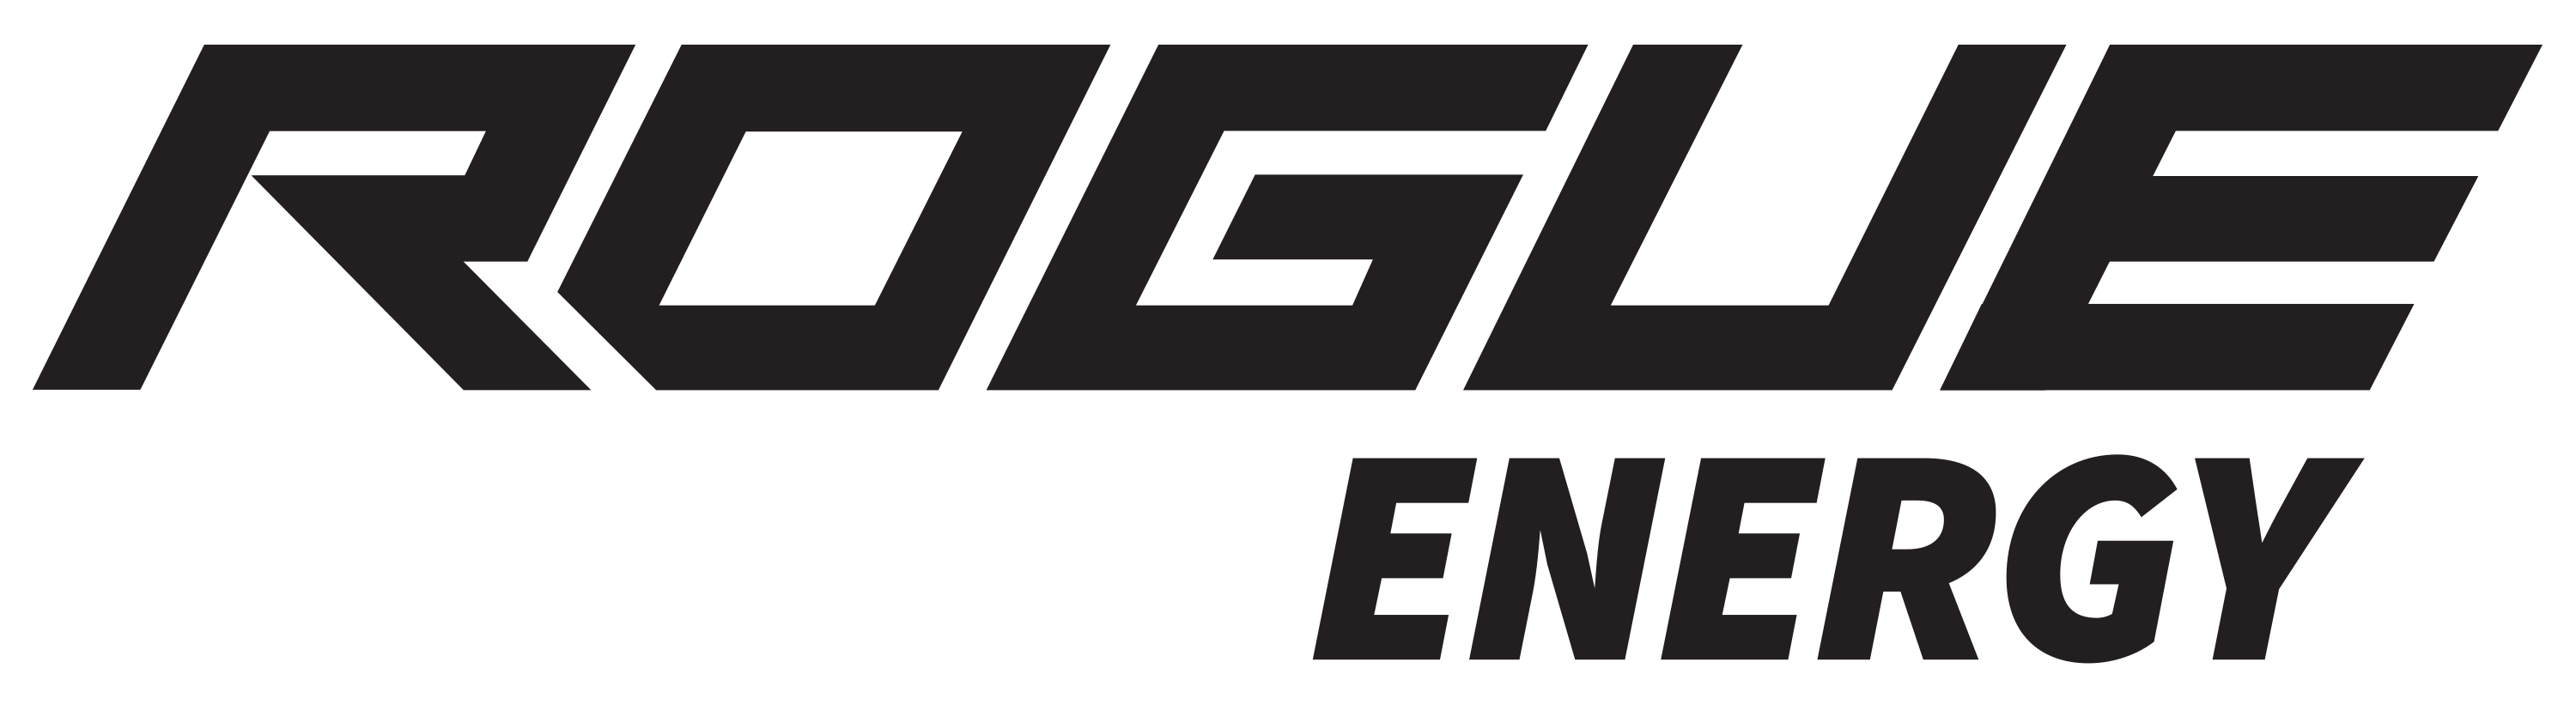 Rogue Energy coupons logo